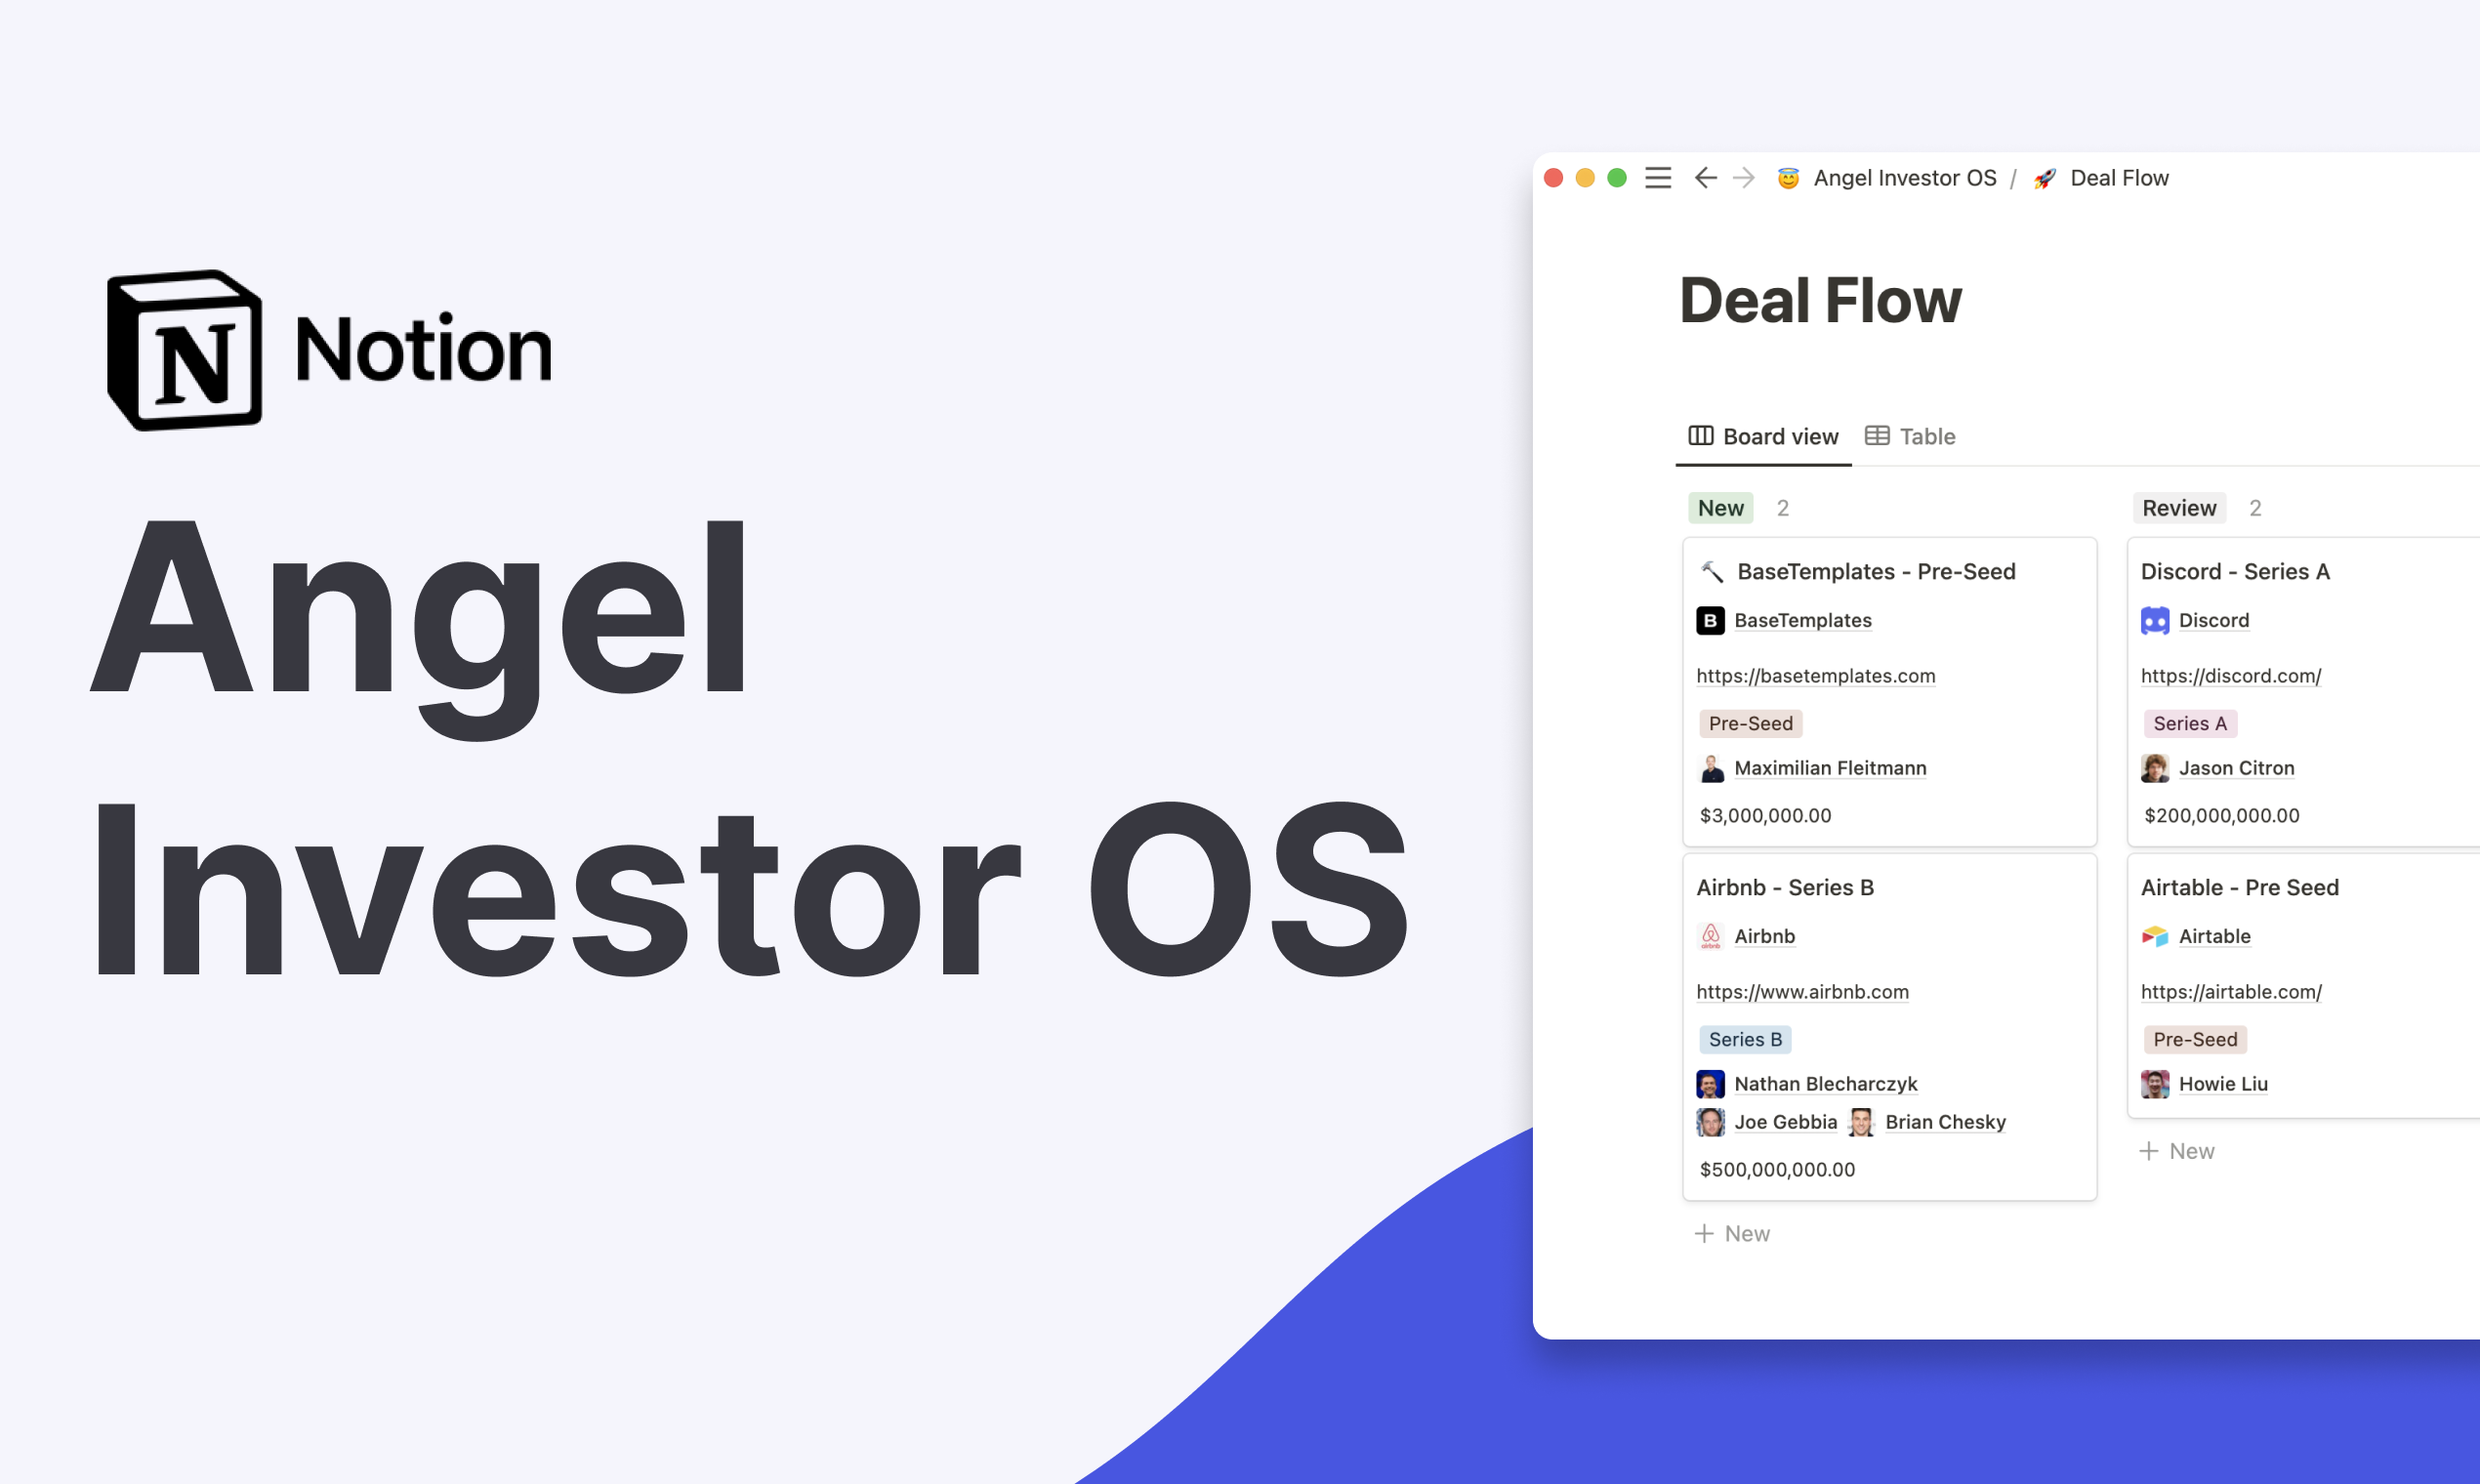 Angel Investor OS